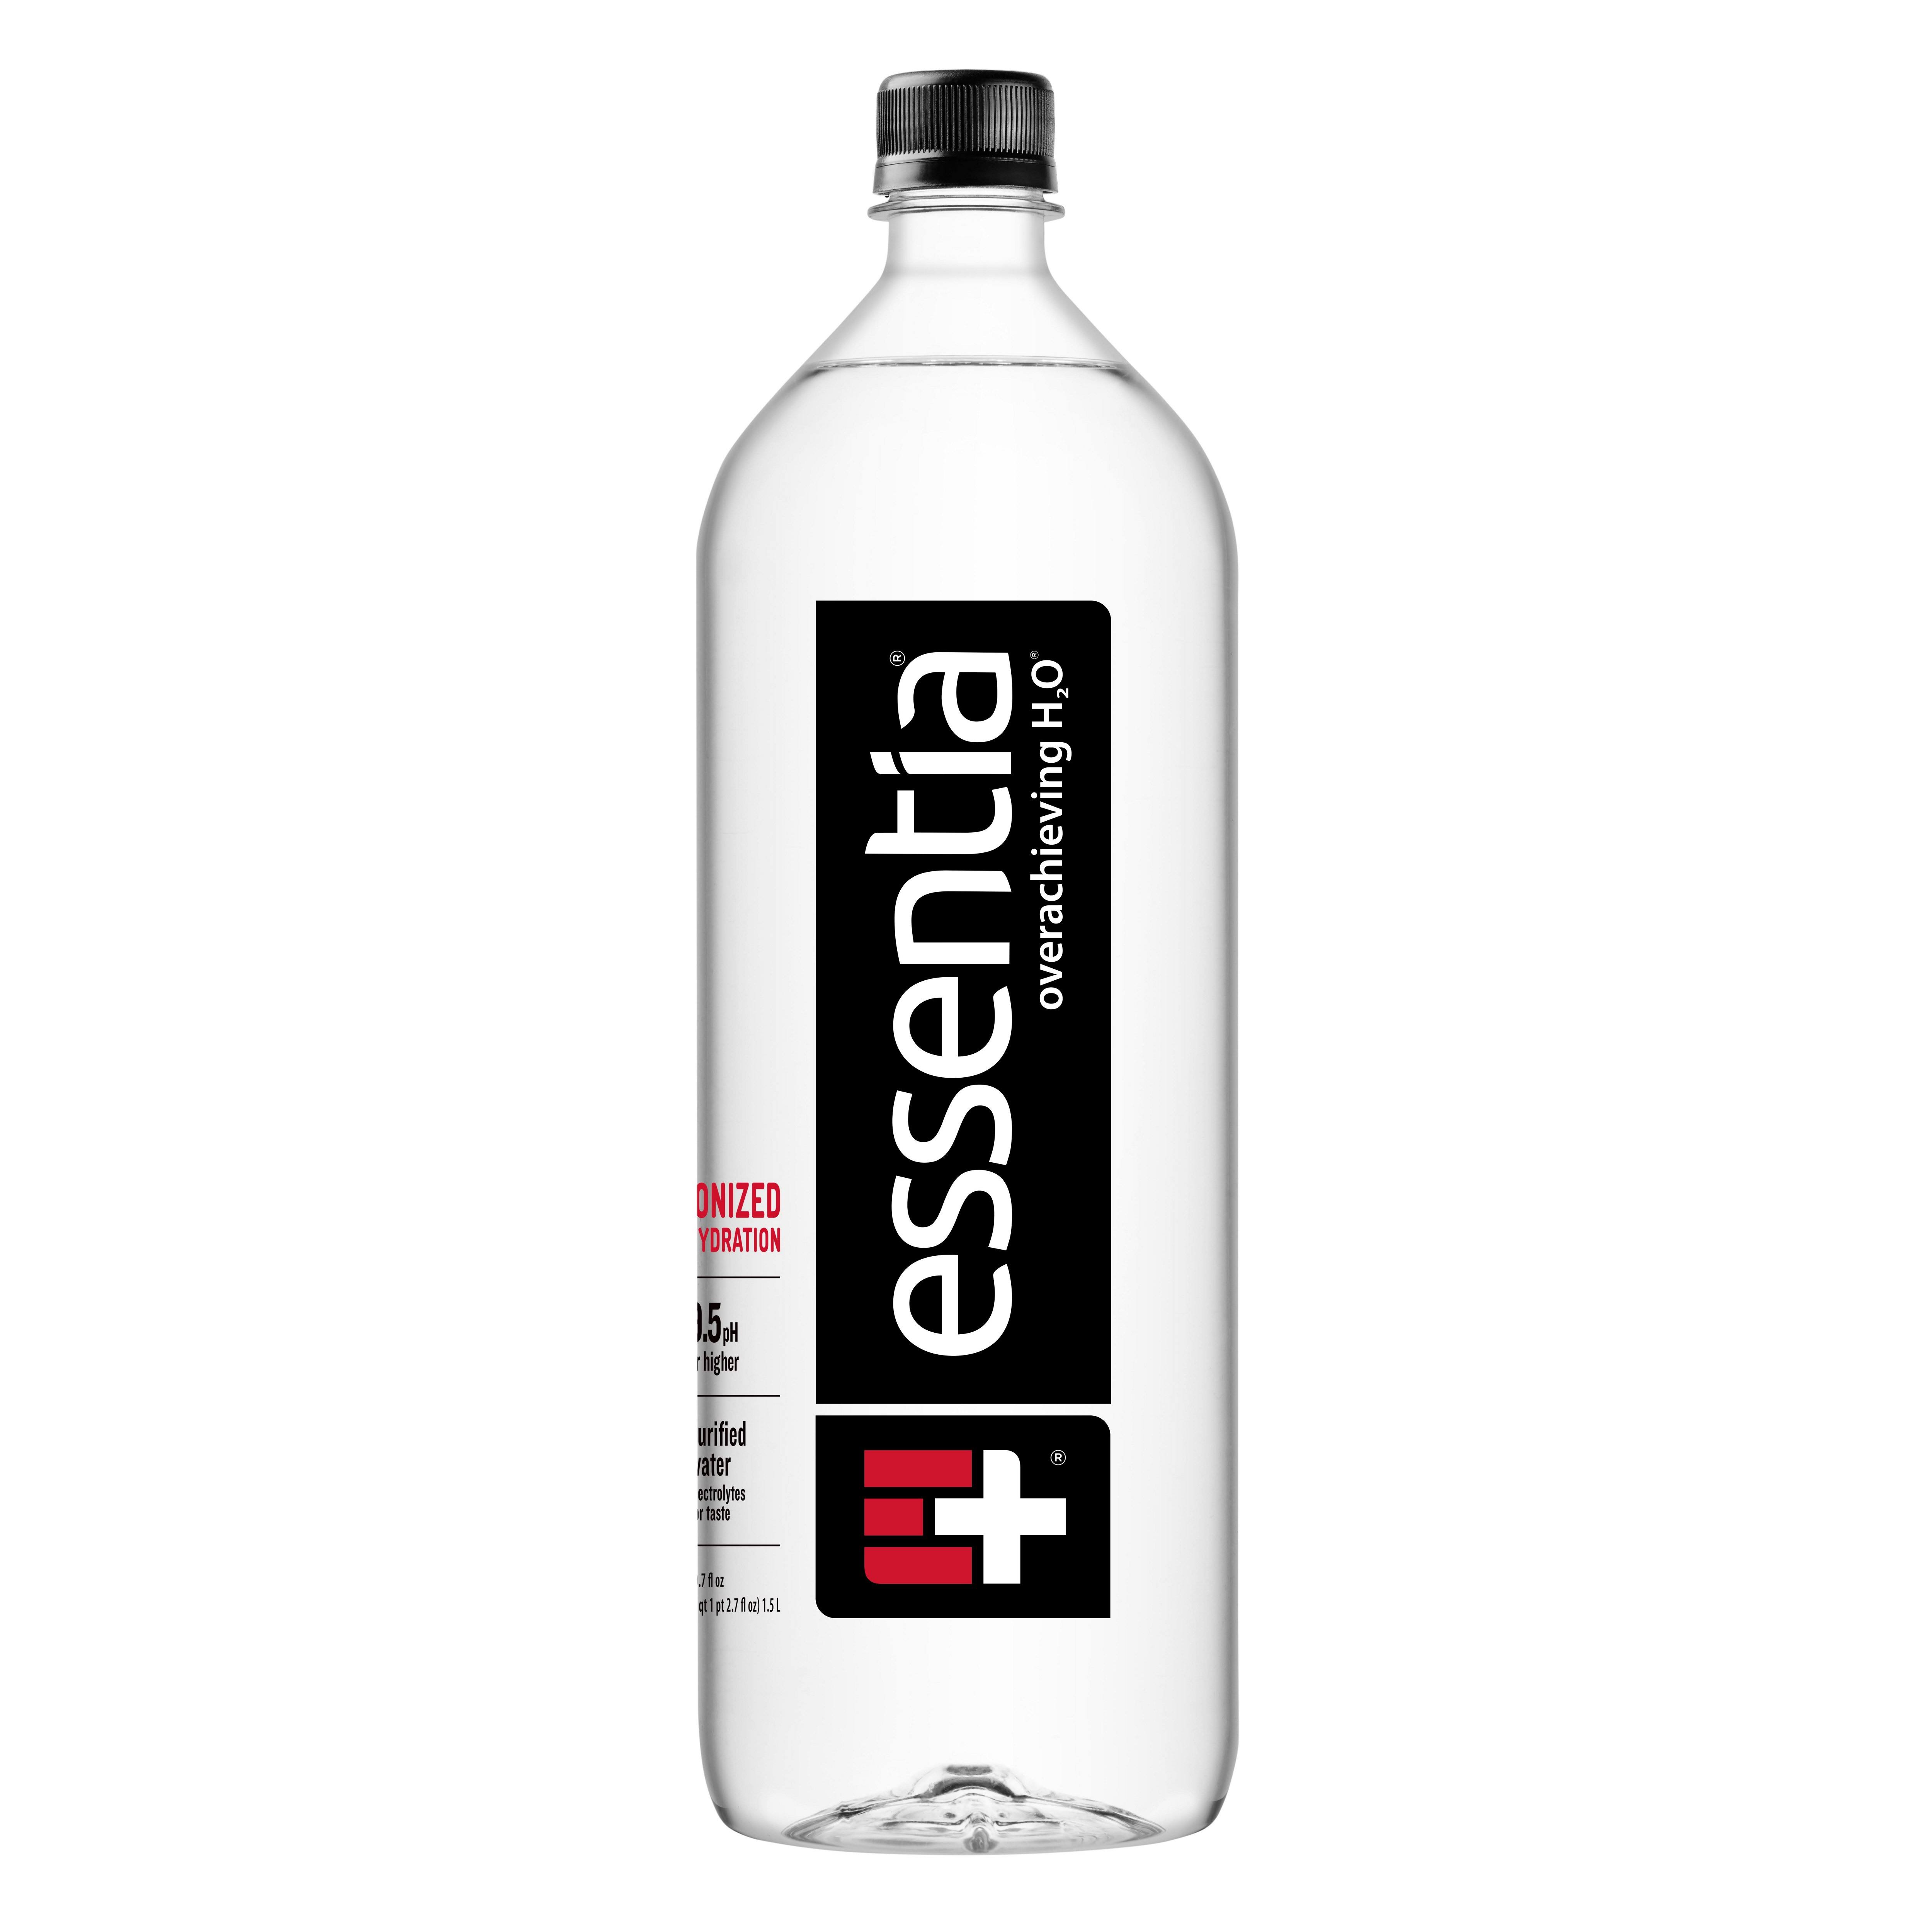 Essentia 9.5 pH Drinking Water - 1.5l